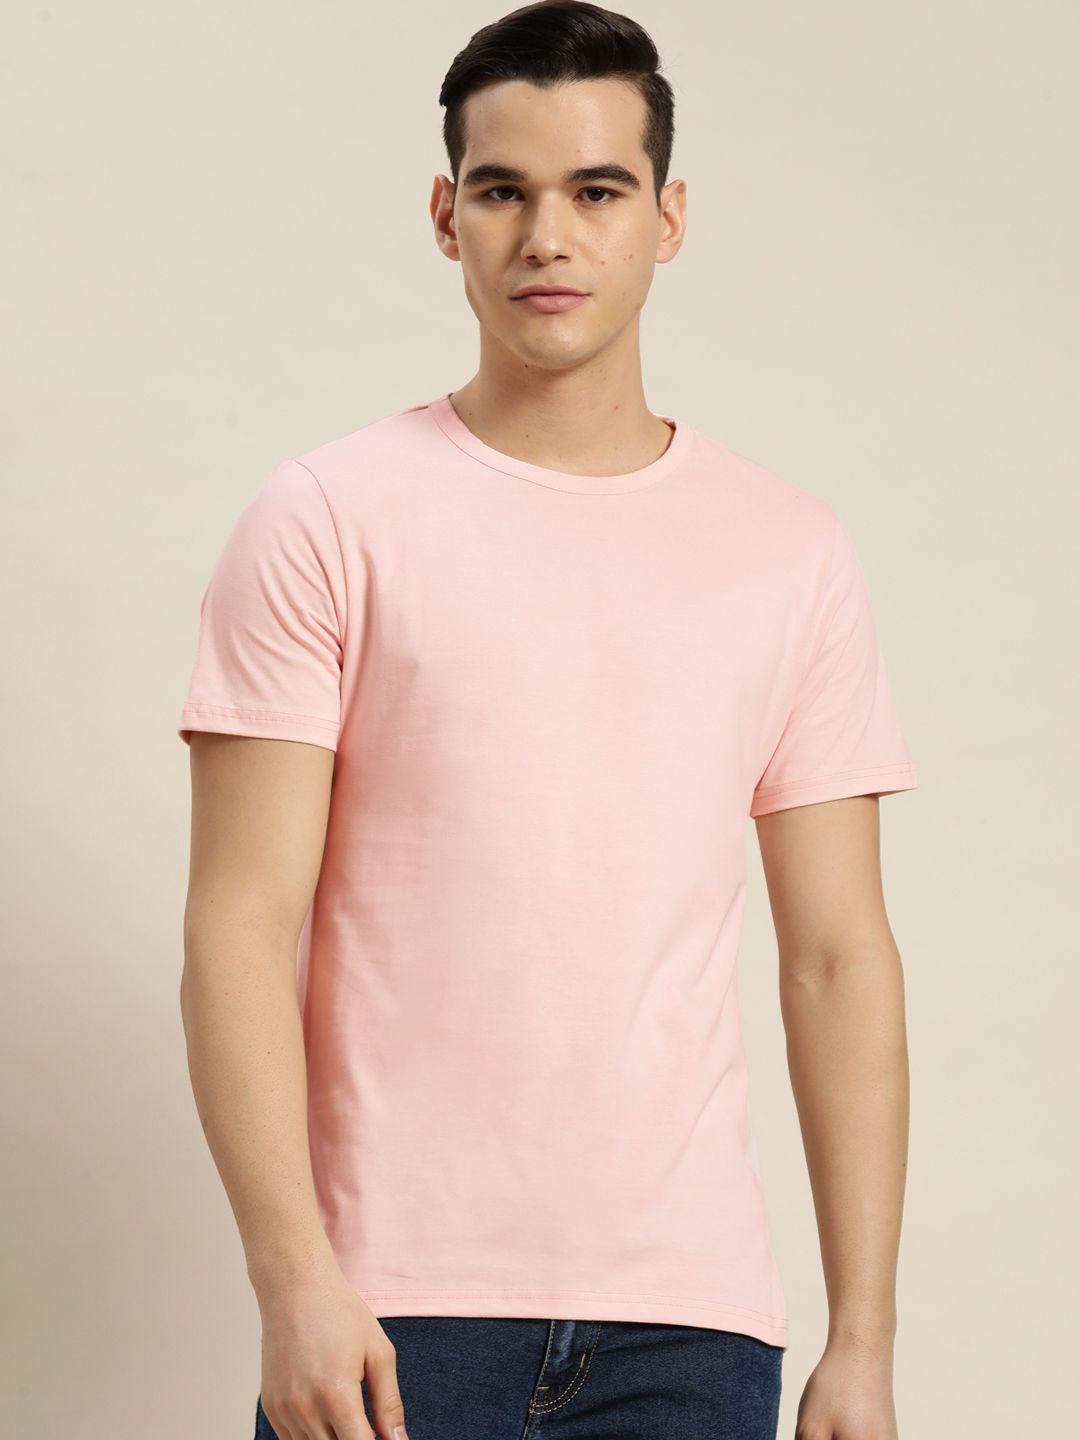 Baby Pink T-Shirt for Men – Cutton Garments